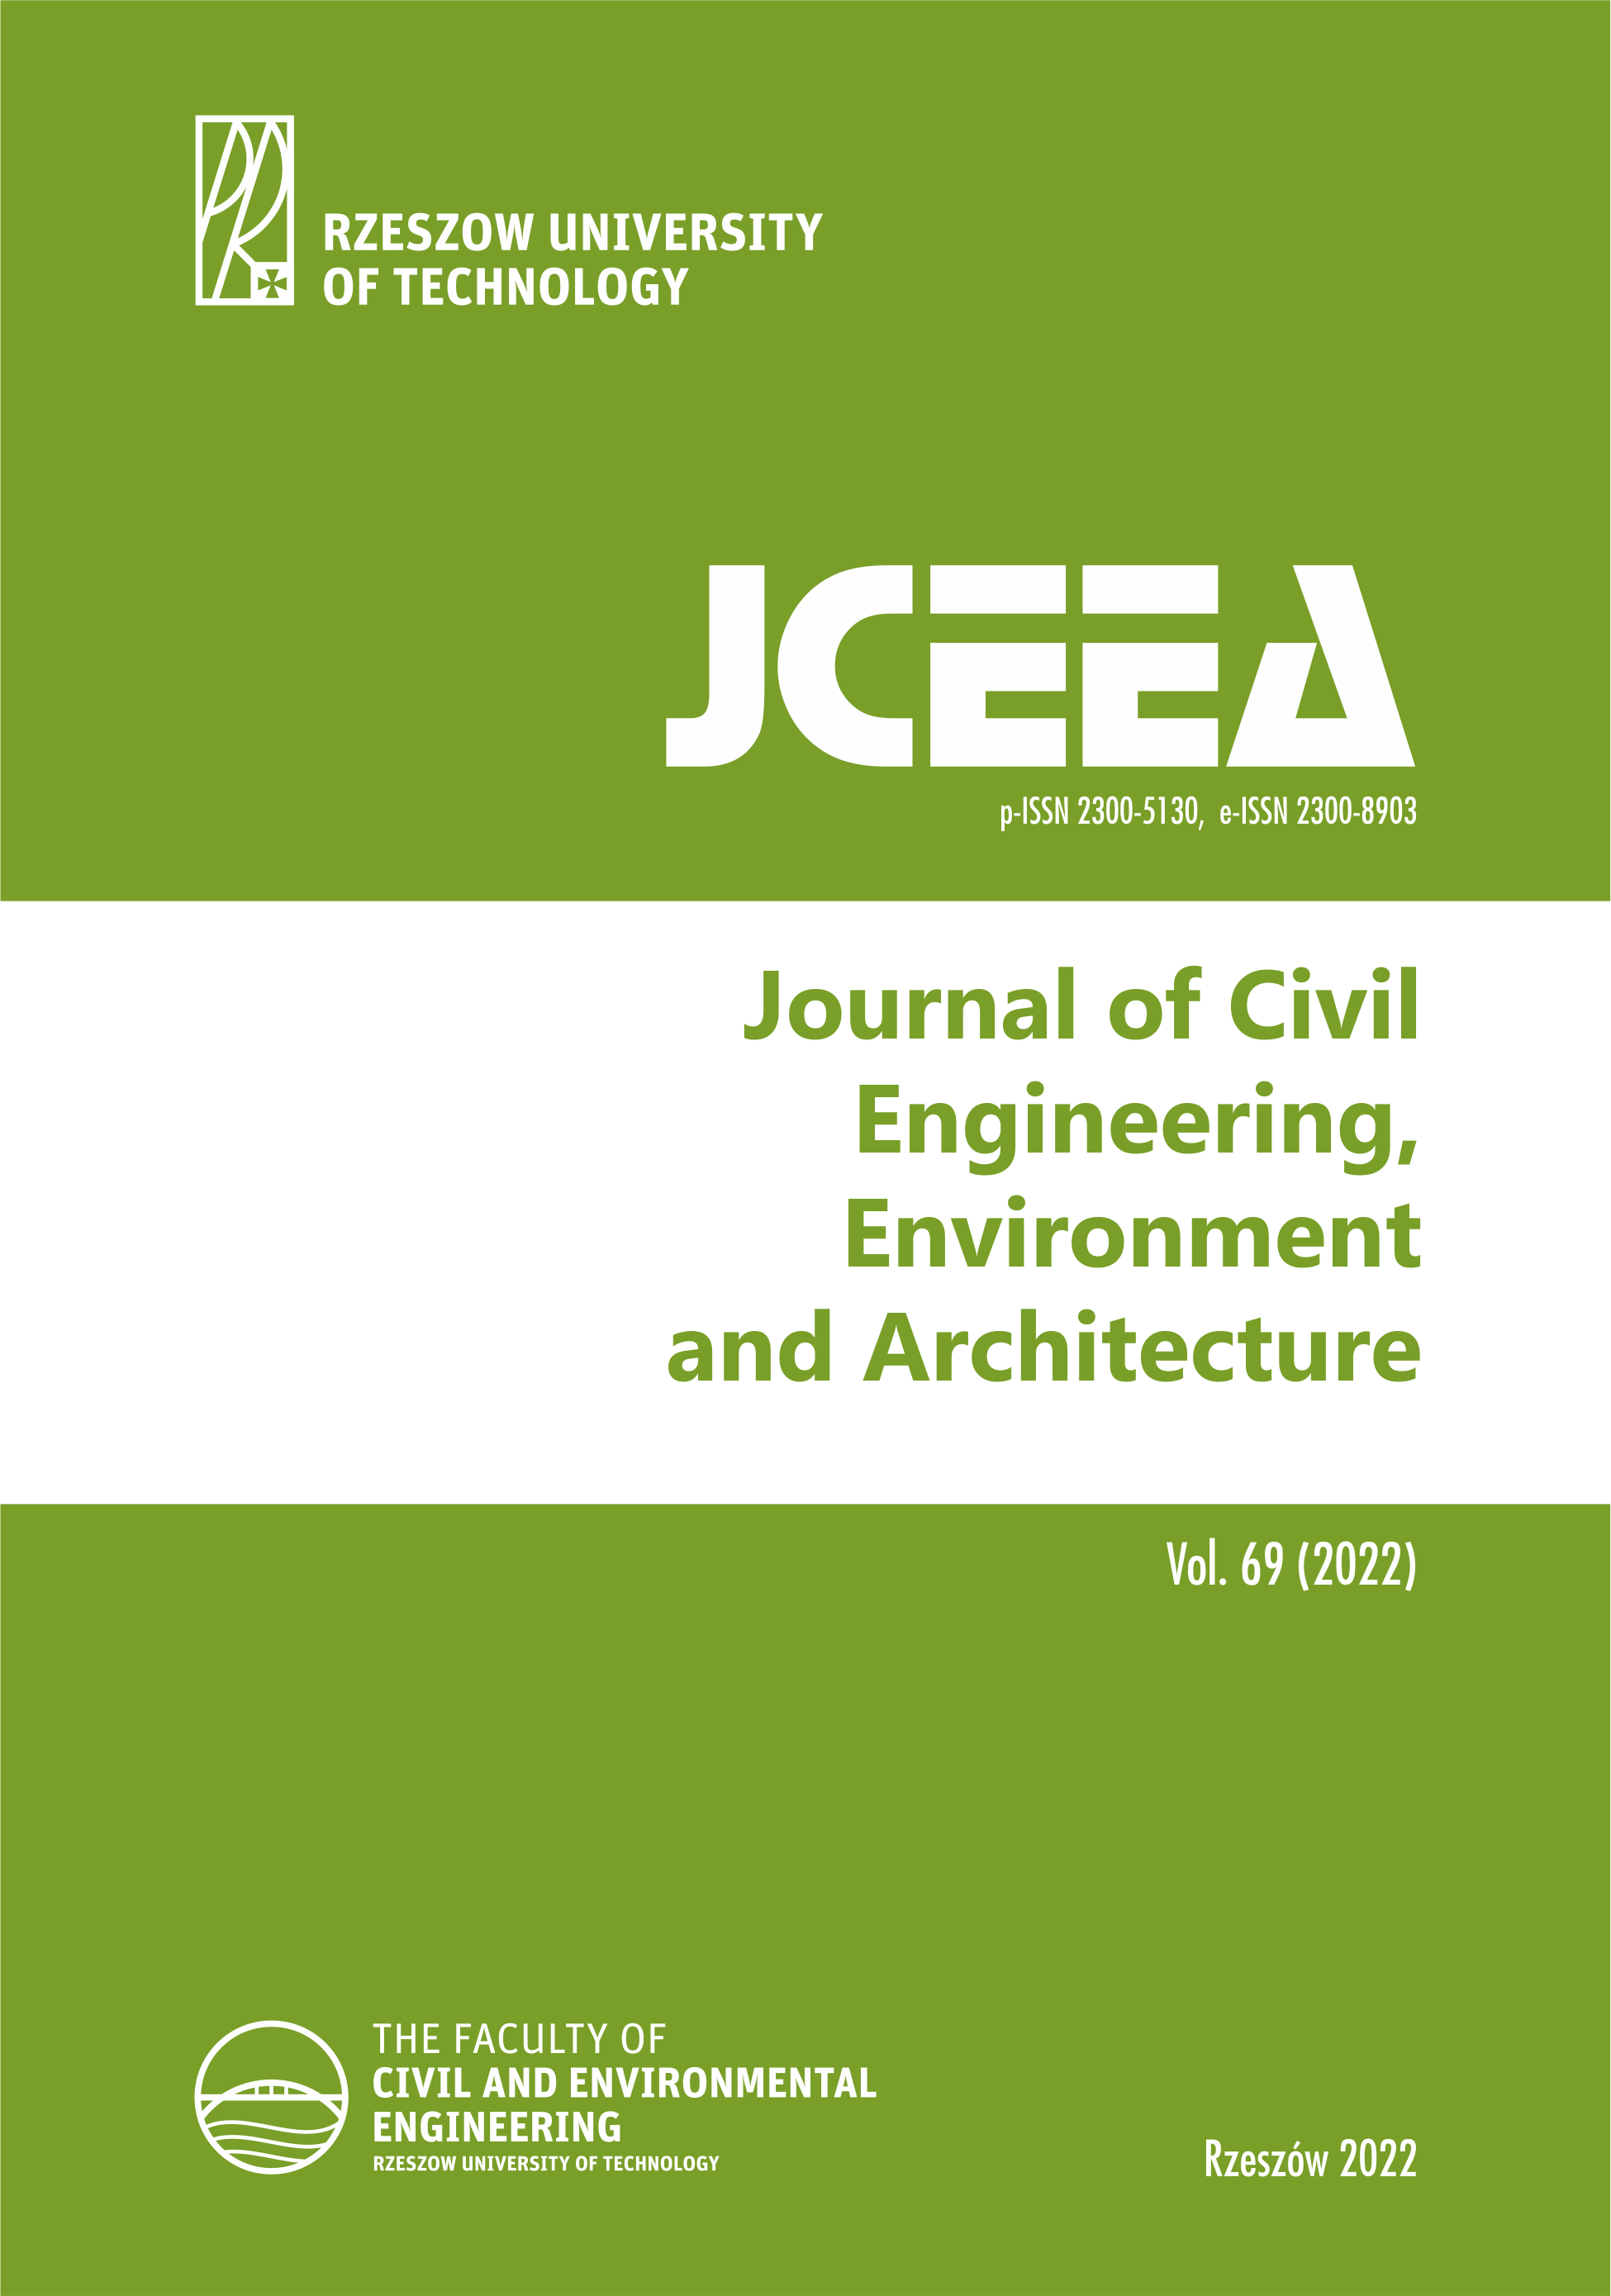 JCEEA 69 (2022) Cover page